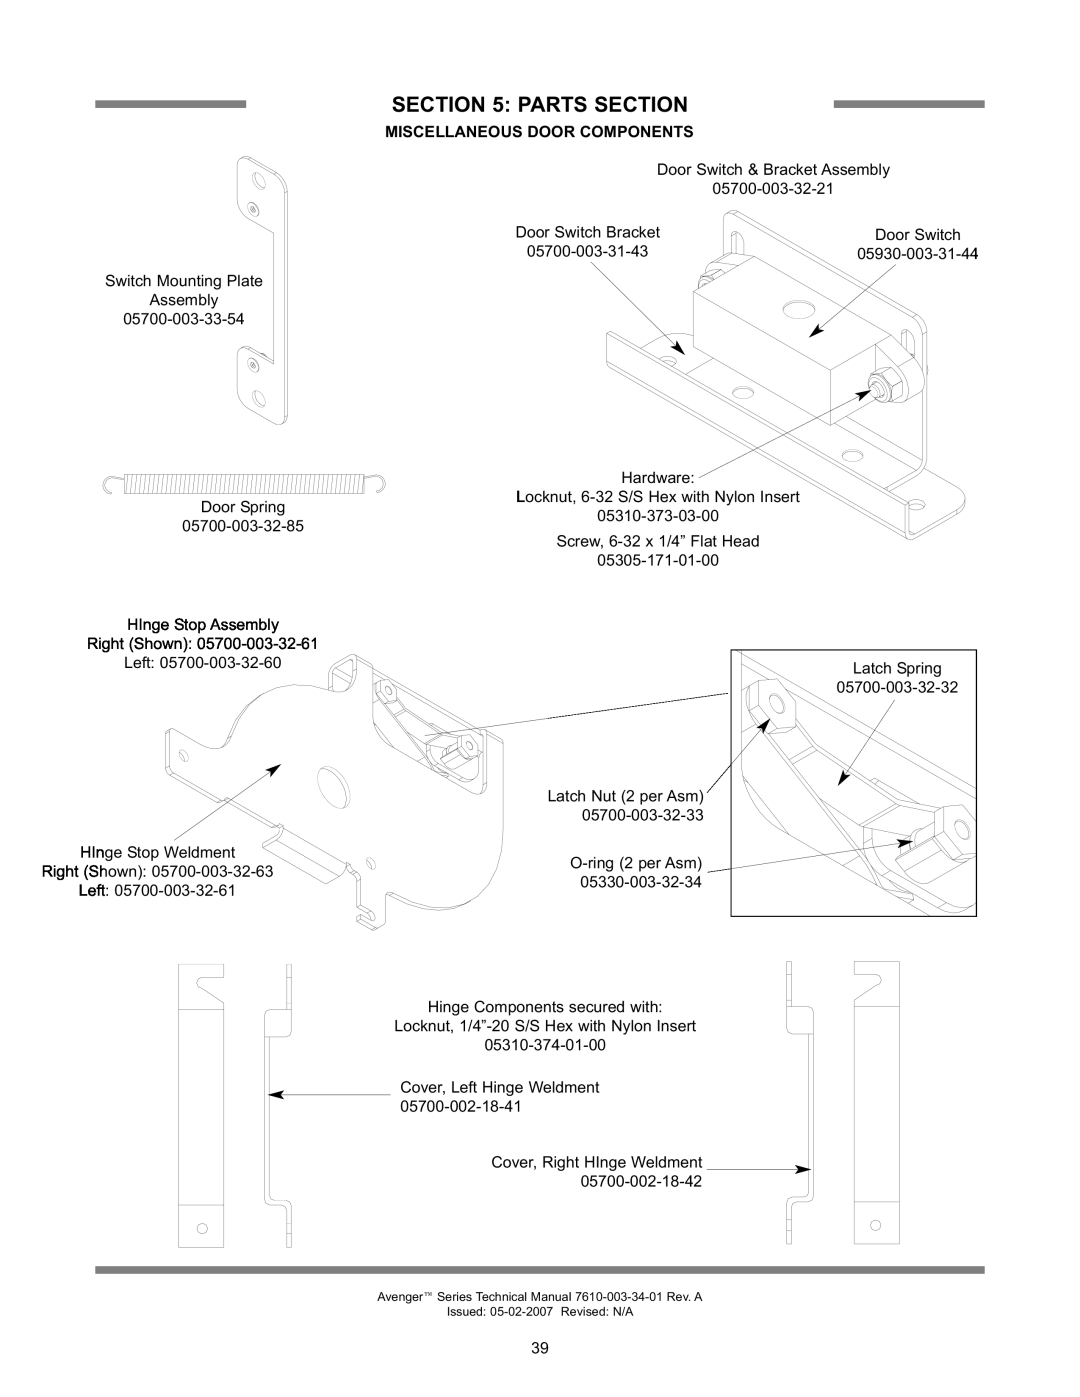 Jackson Avenger HT, Avenger LT technical manual Miscellaneous Door Components, Parts Section 